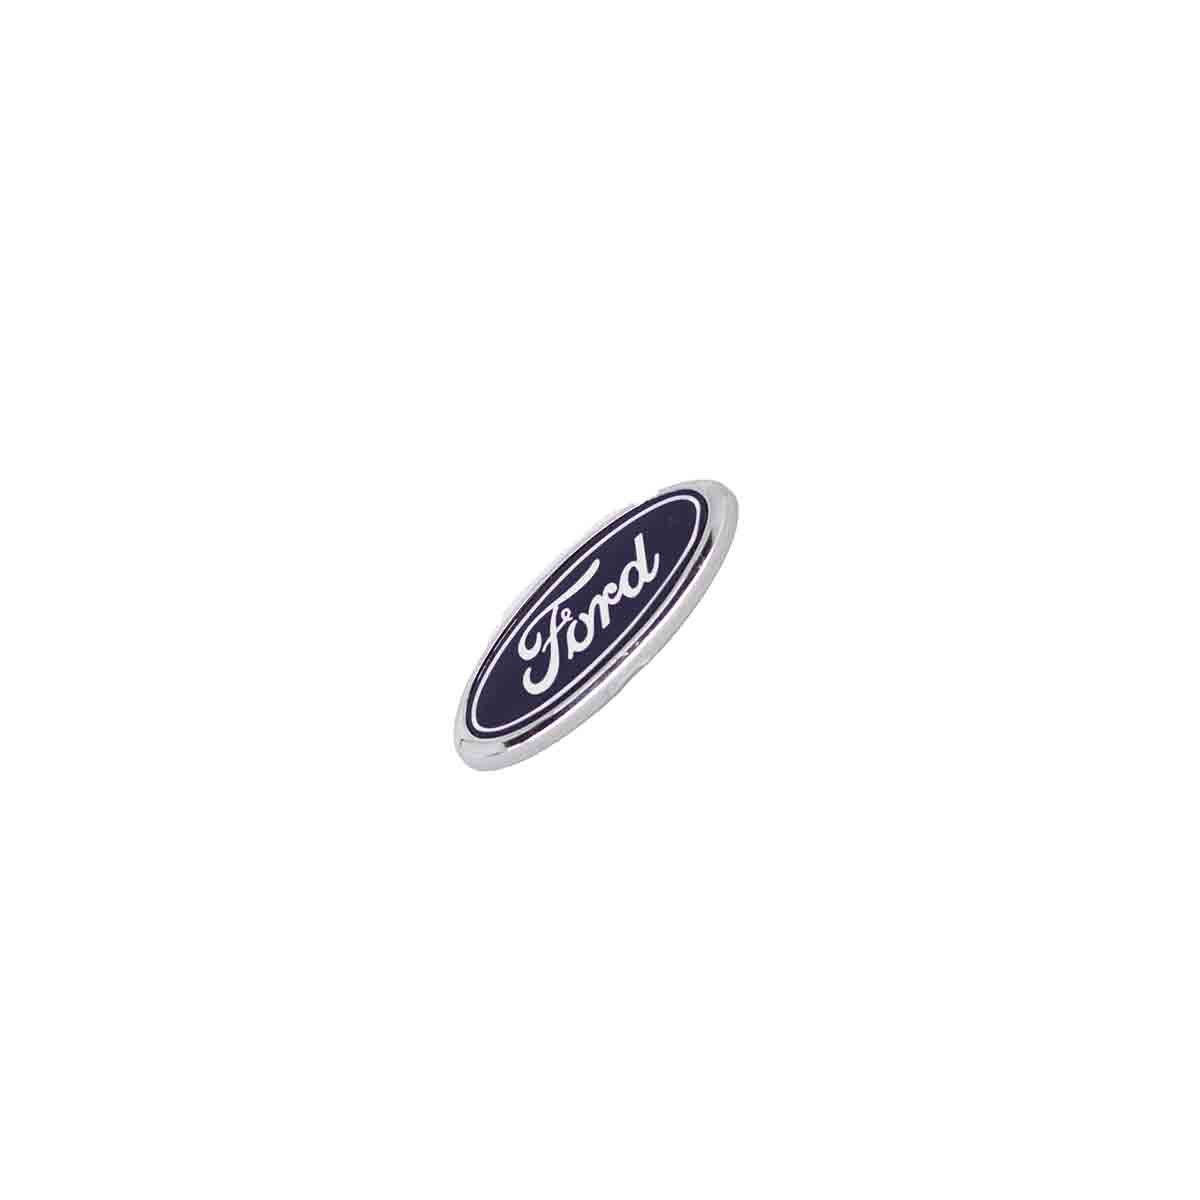 Emblema Ford Oval Grade - Pequeno